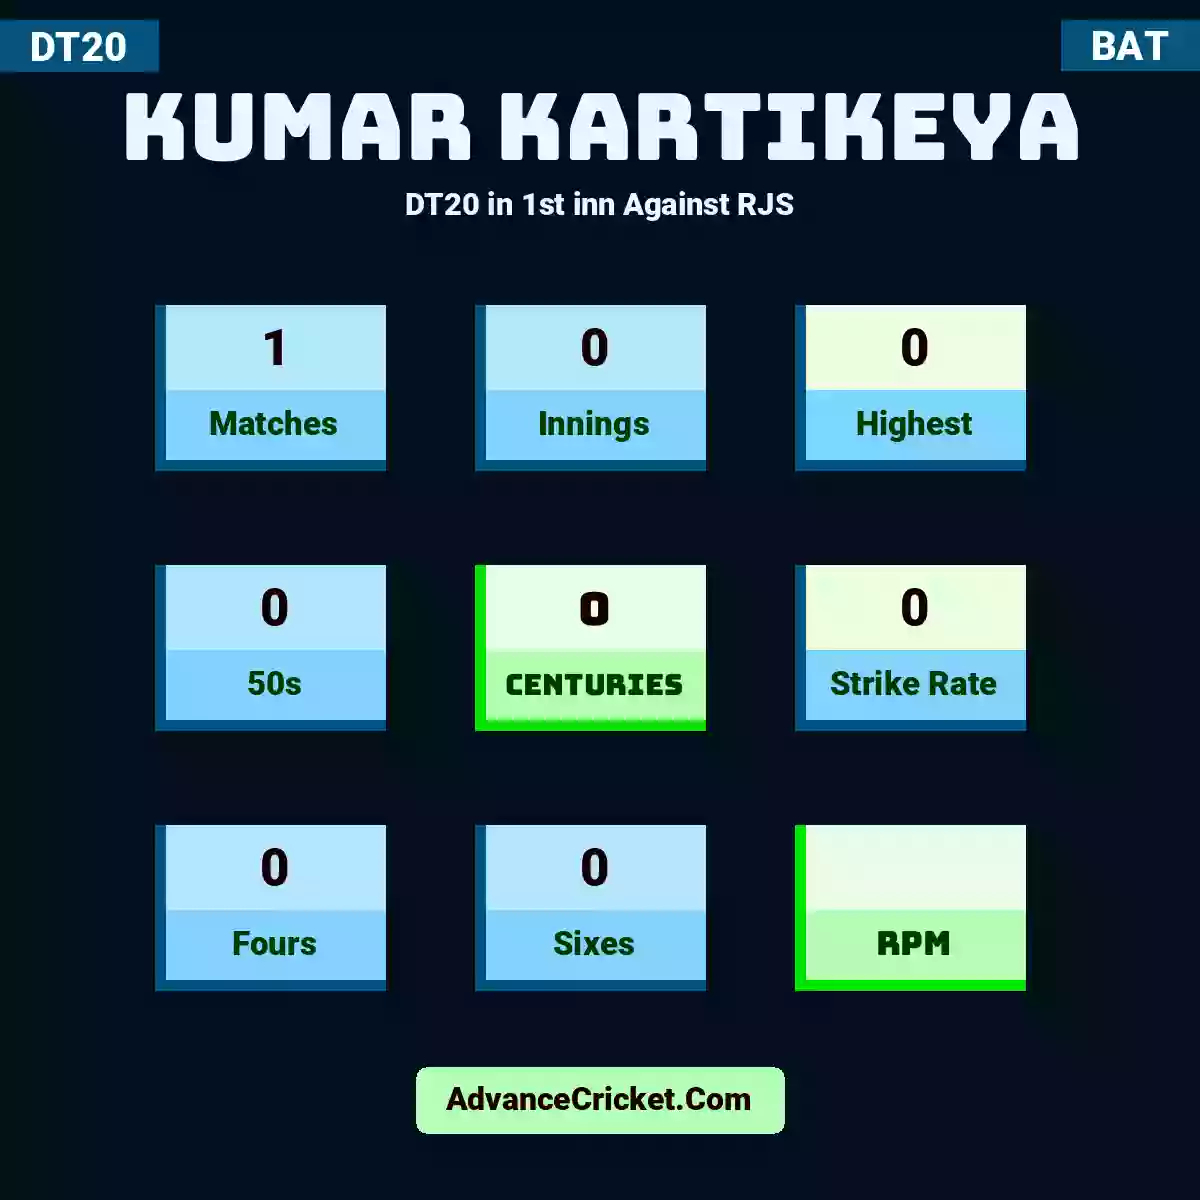 Kumar Kartikeya DT20  in 1st inn Against RJS, Kumar Kartikeya played 1 matches, scored 0 runs as highest, 0 half-centuries, and 0 centuries, with a strike rate of 0. K.Kartikeya hit 0 fours and 0 sixes.